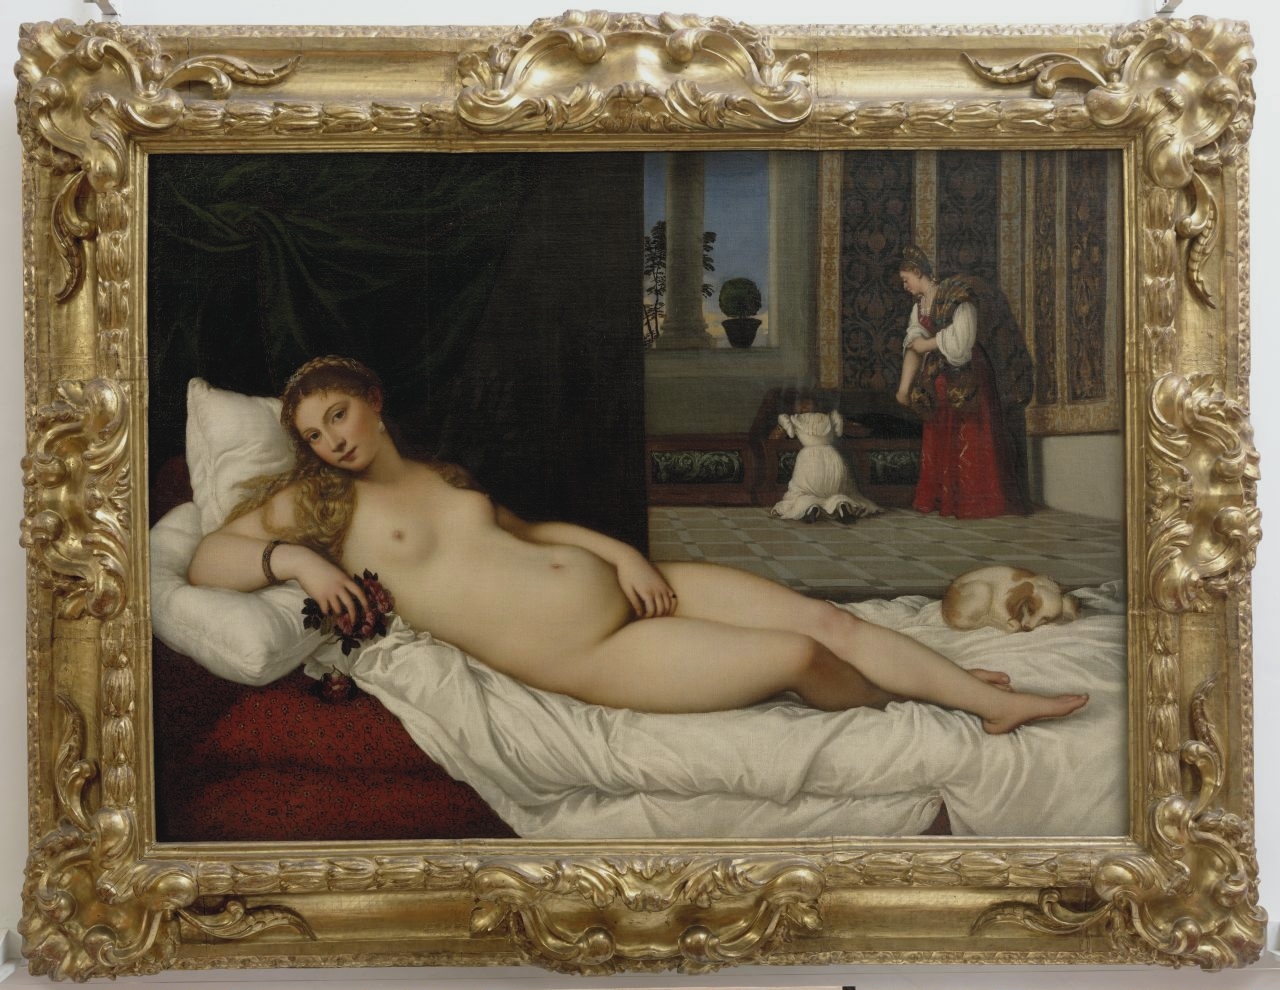 Venus of Urbino, Titian. 1538. Oil on canvas